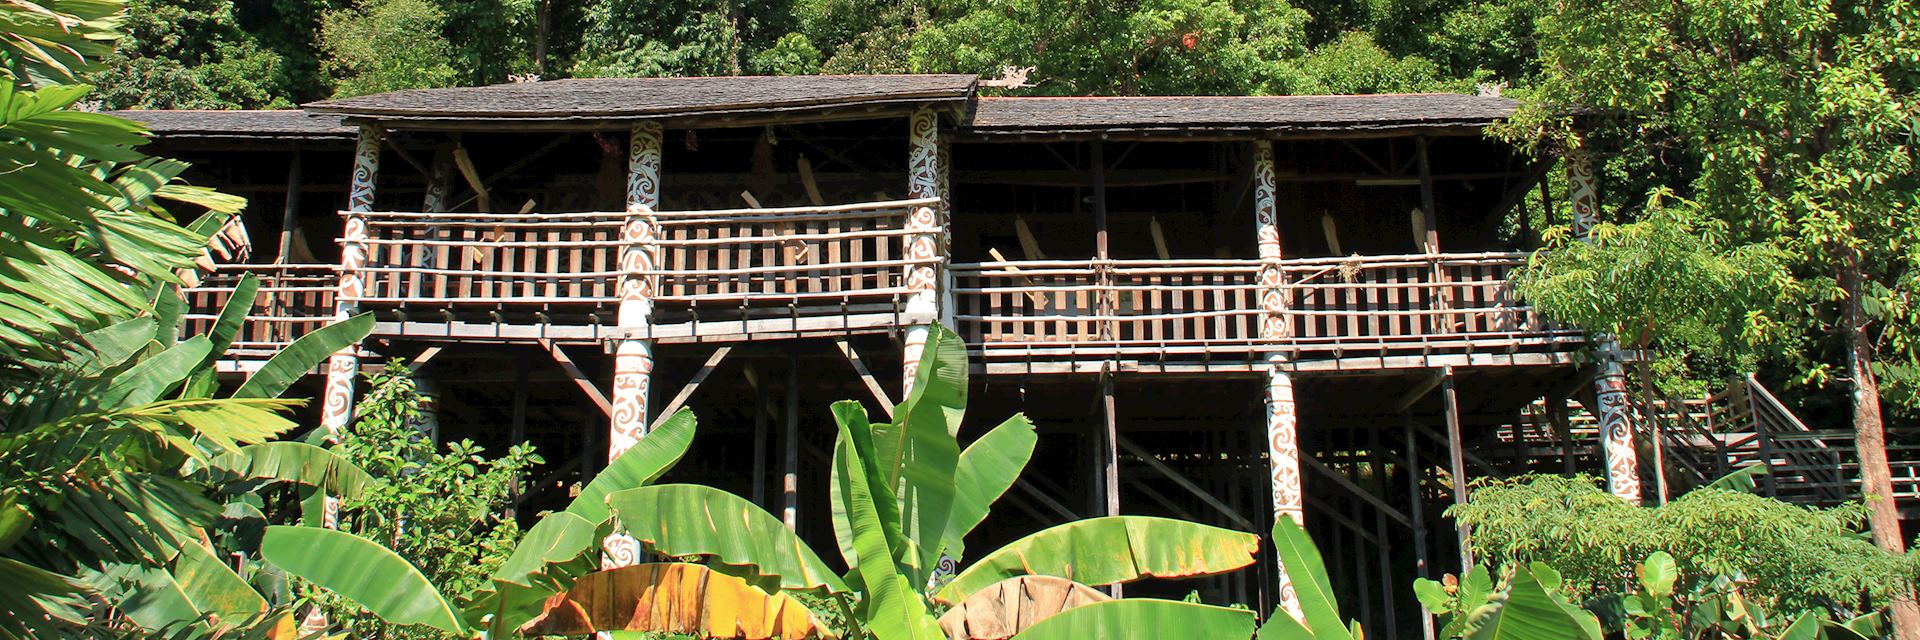 Iban longhouse, Borneo